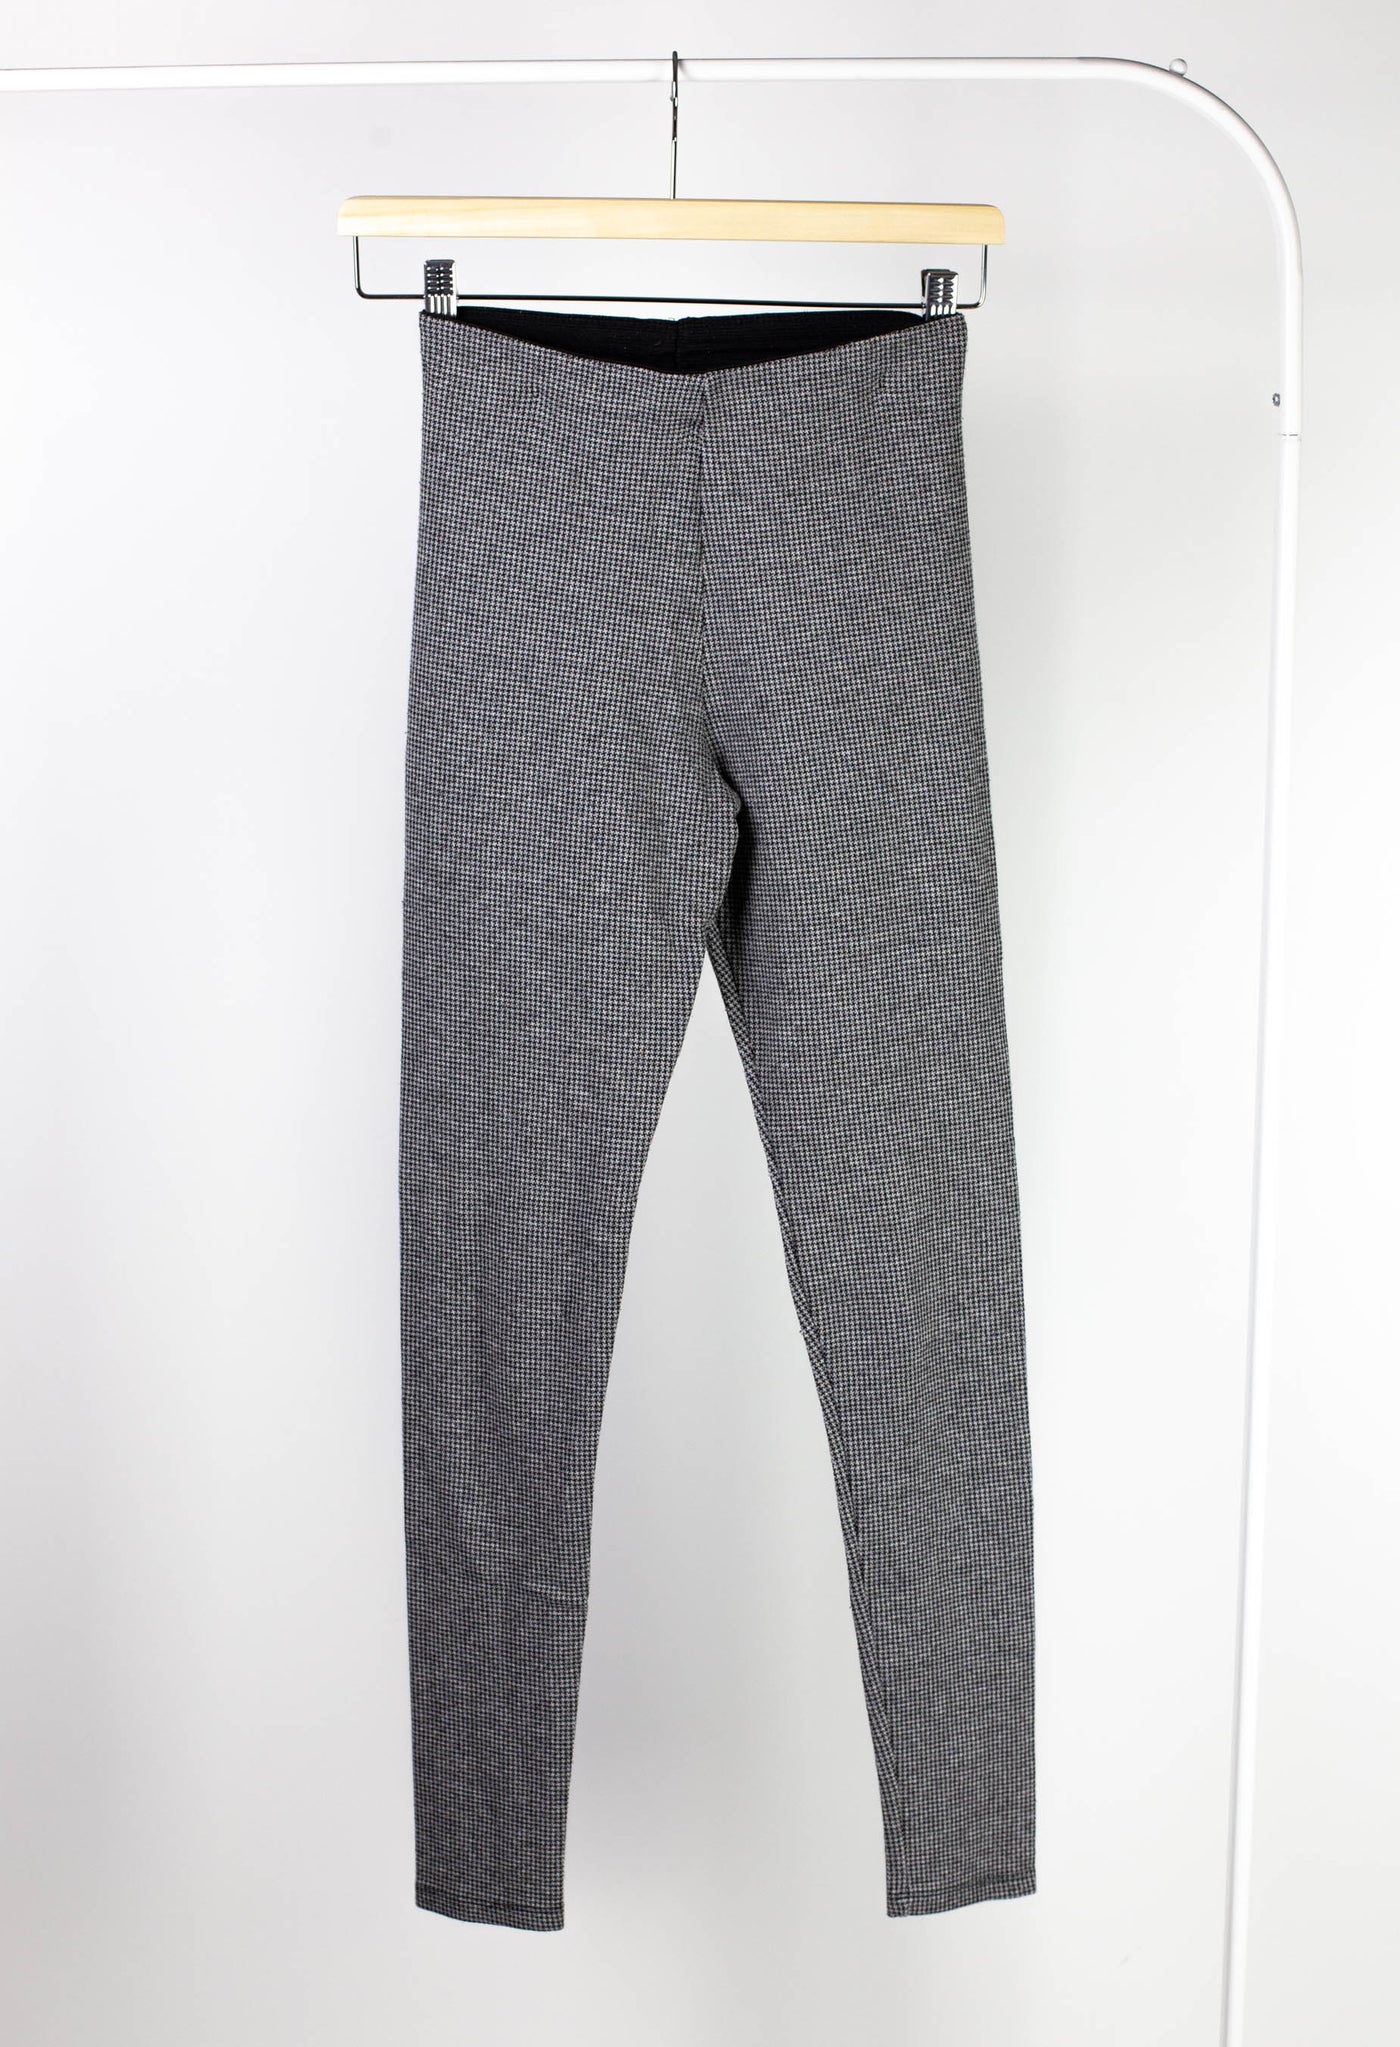 Pantalón tipo tweed gris